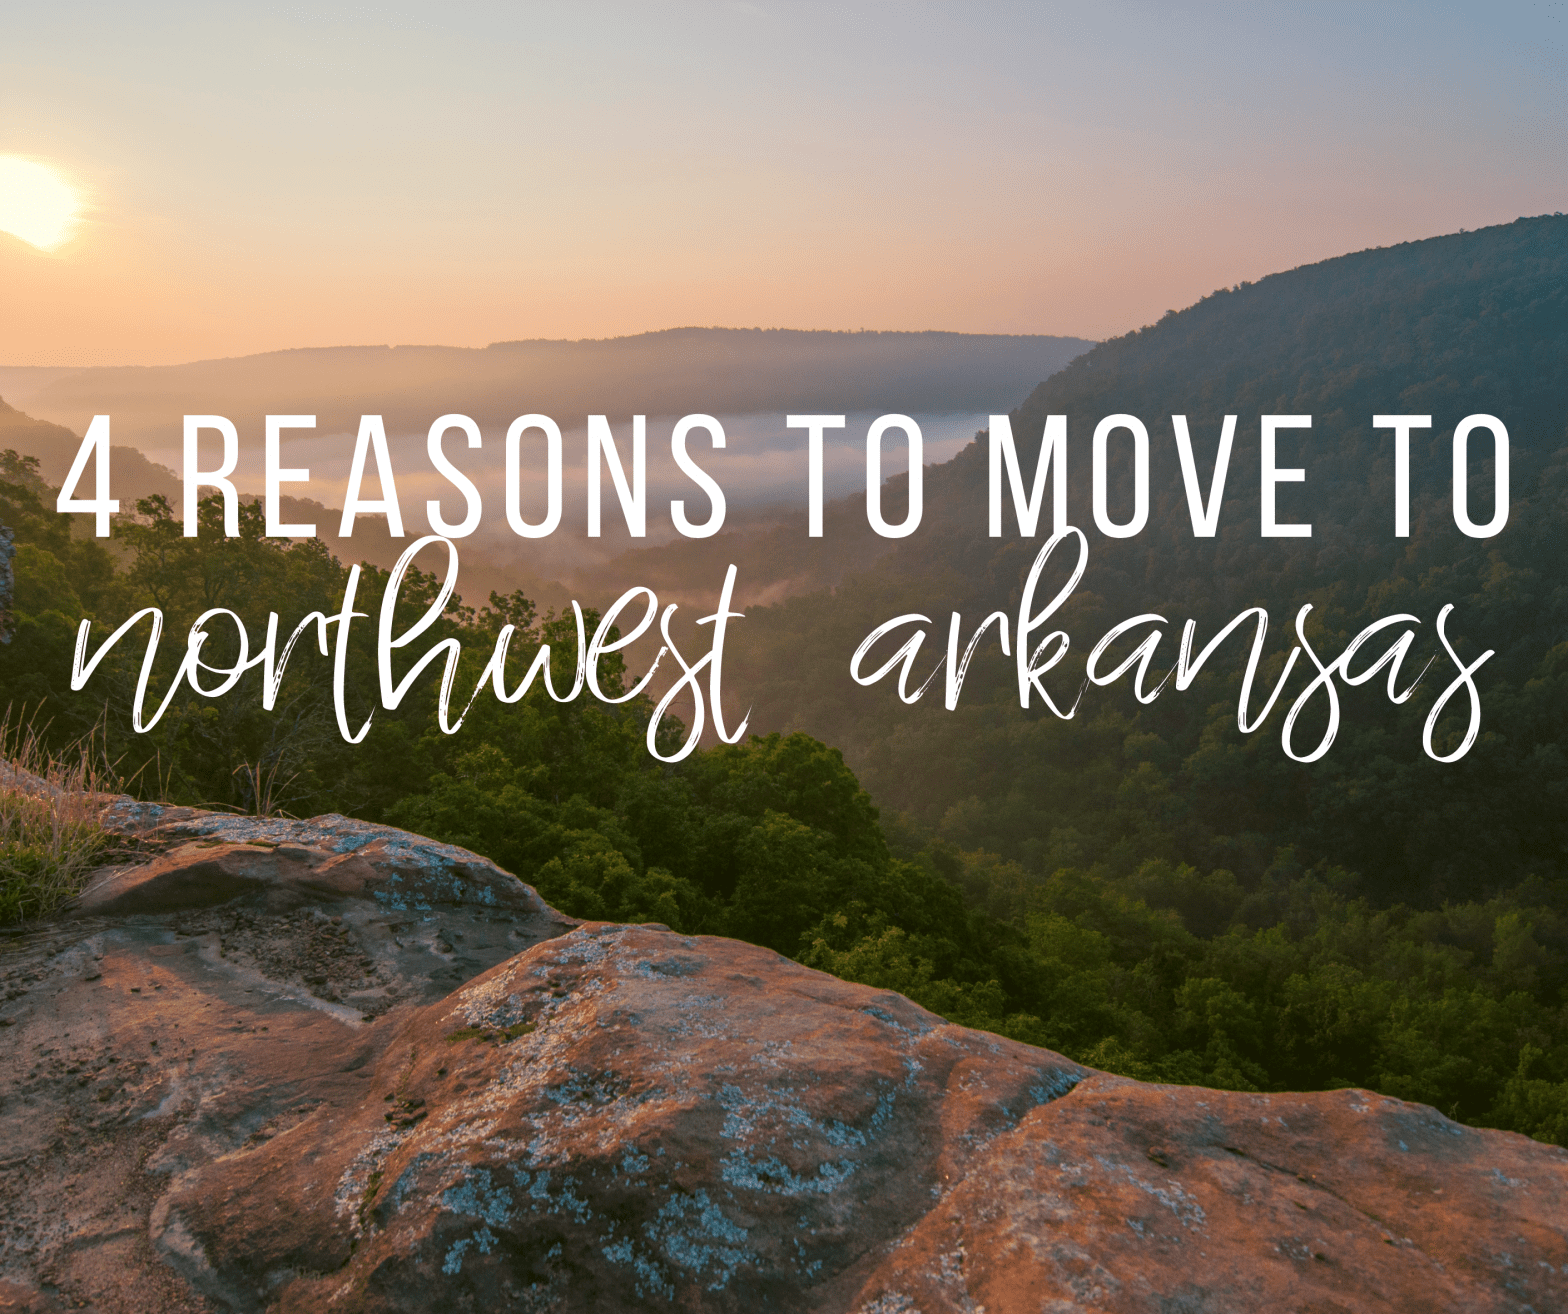 4 Reasons to Move to Northwest Arkansas